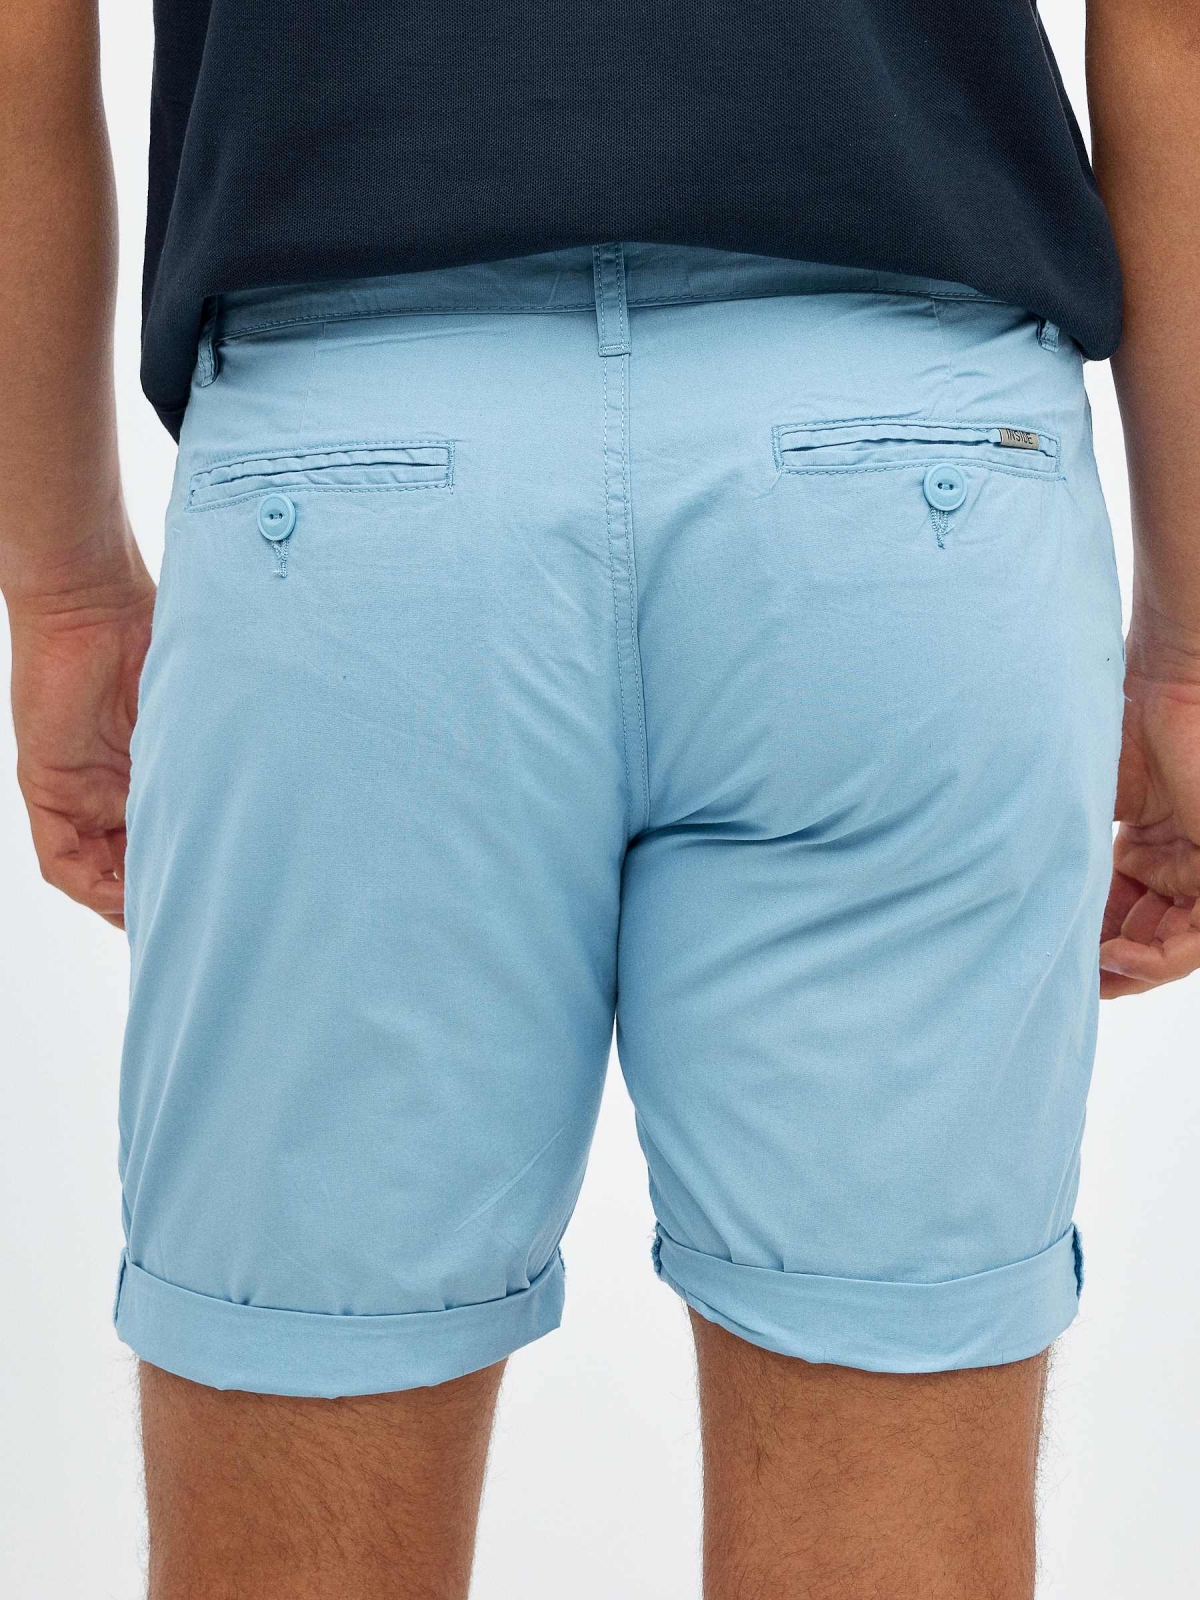 Poplin shorts light blue detail view